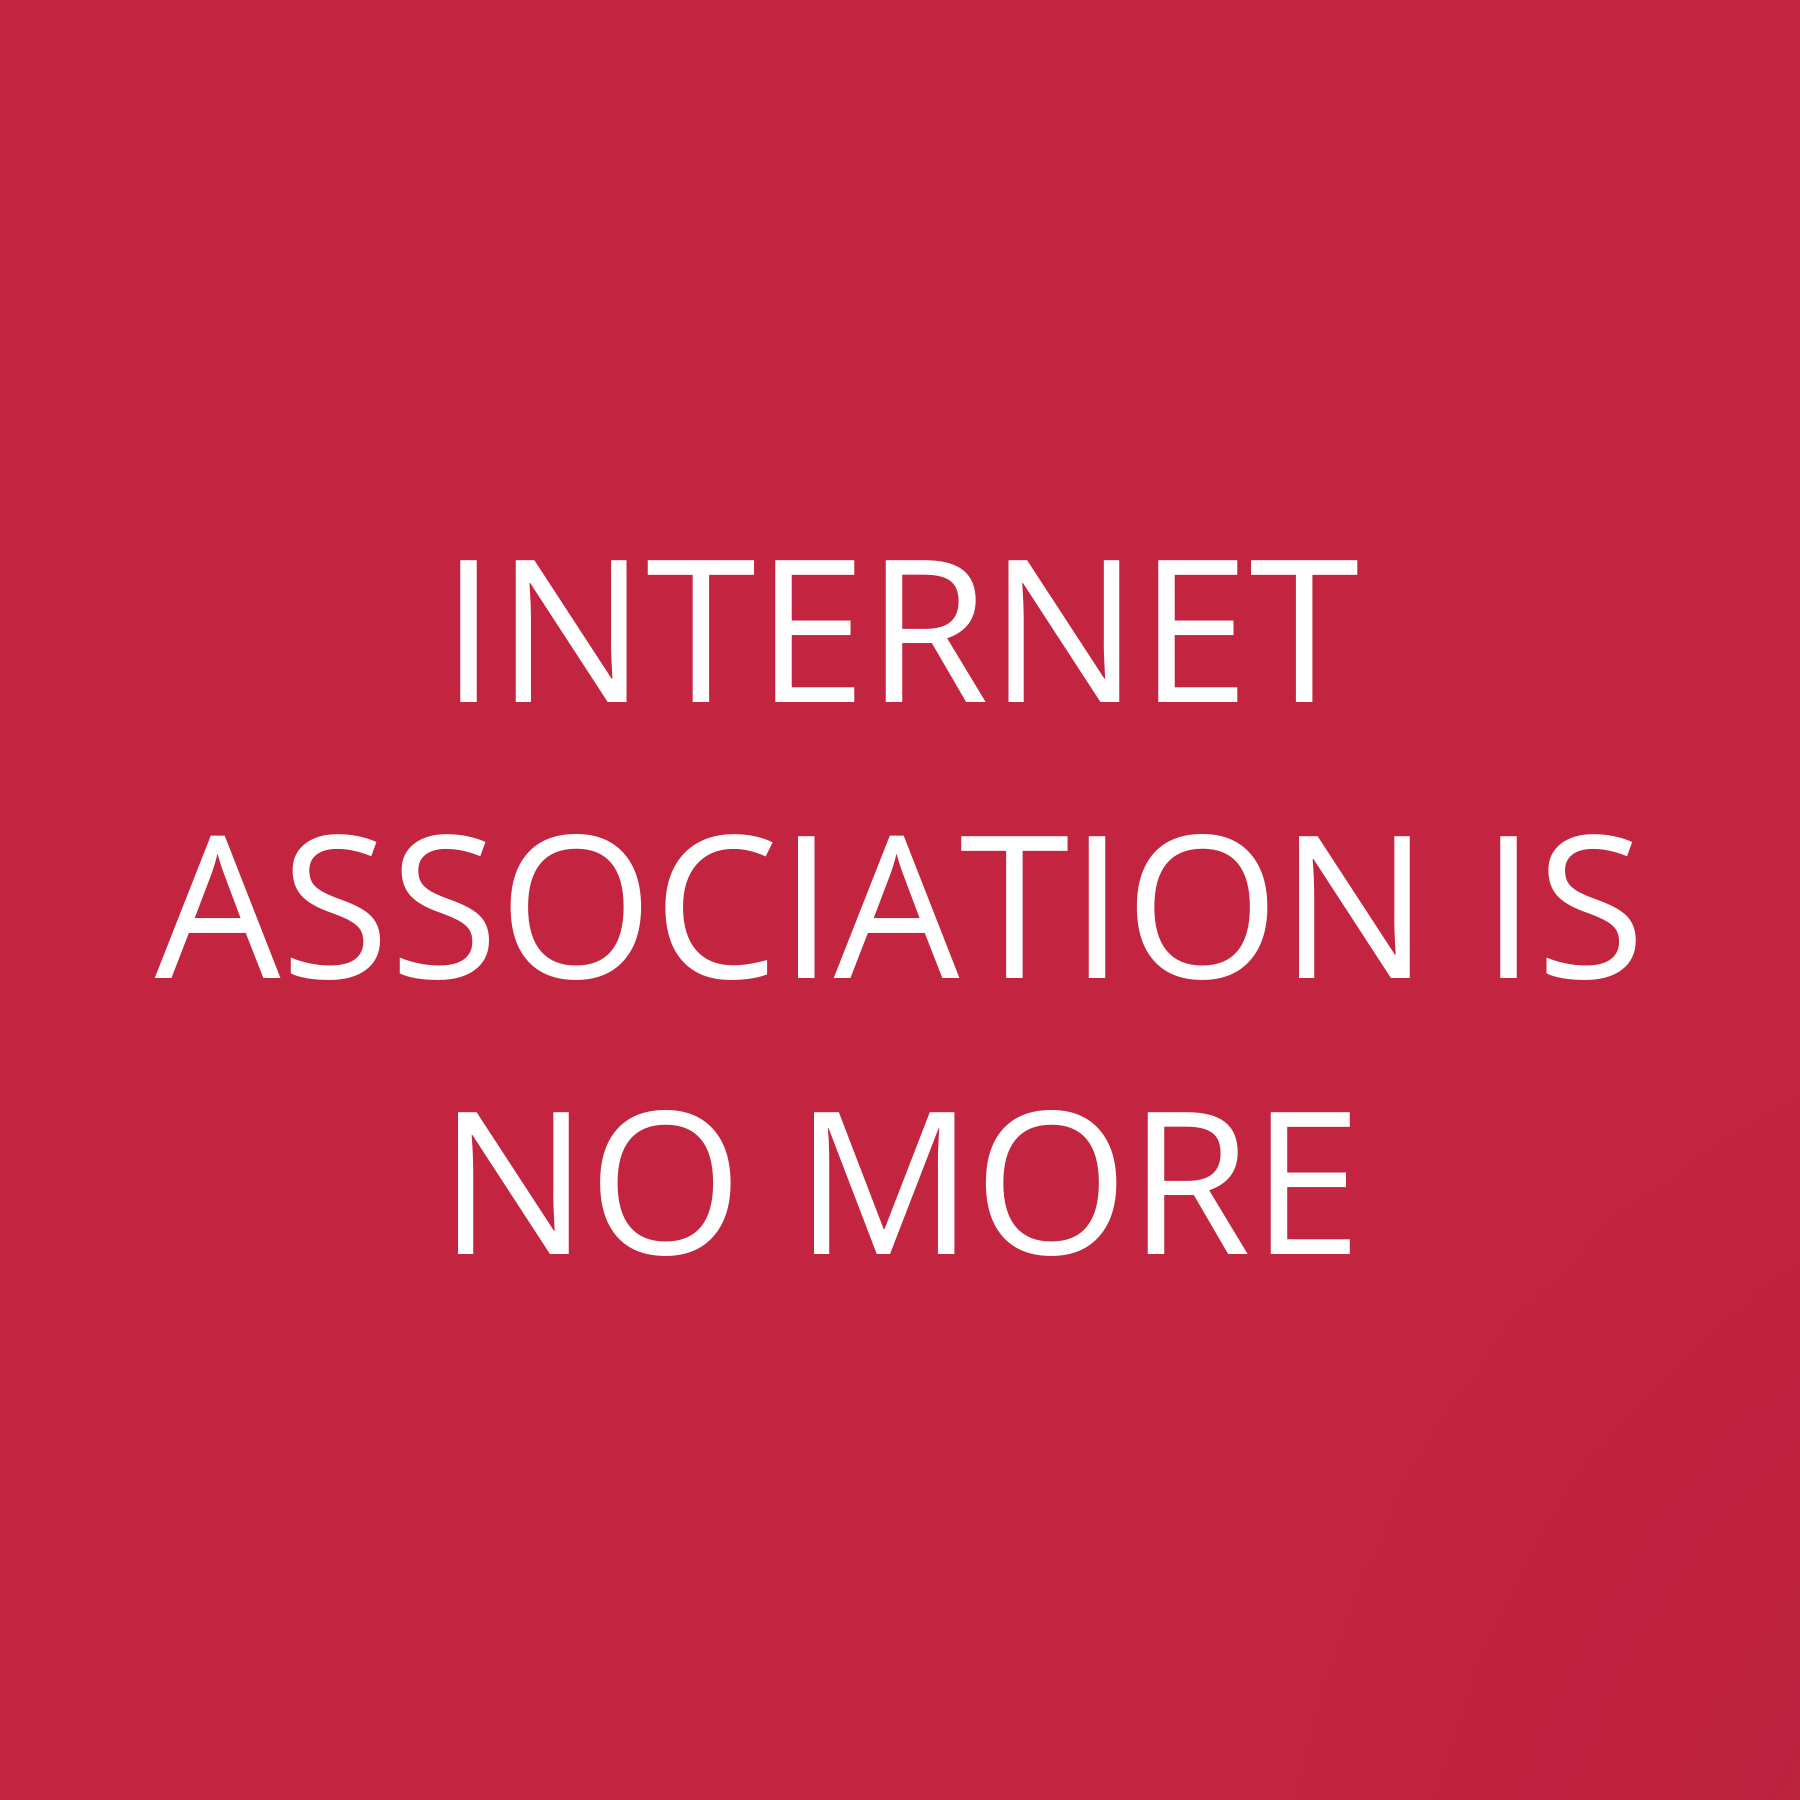 Internet Association is no more